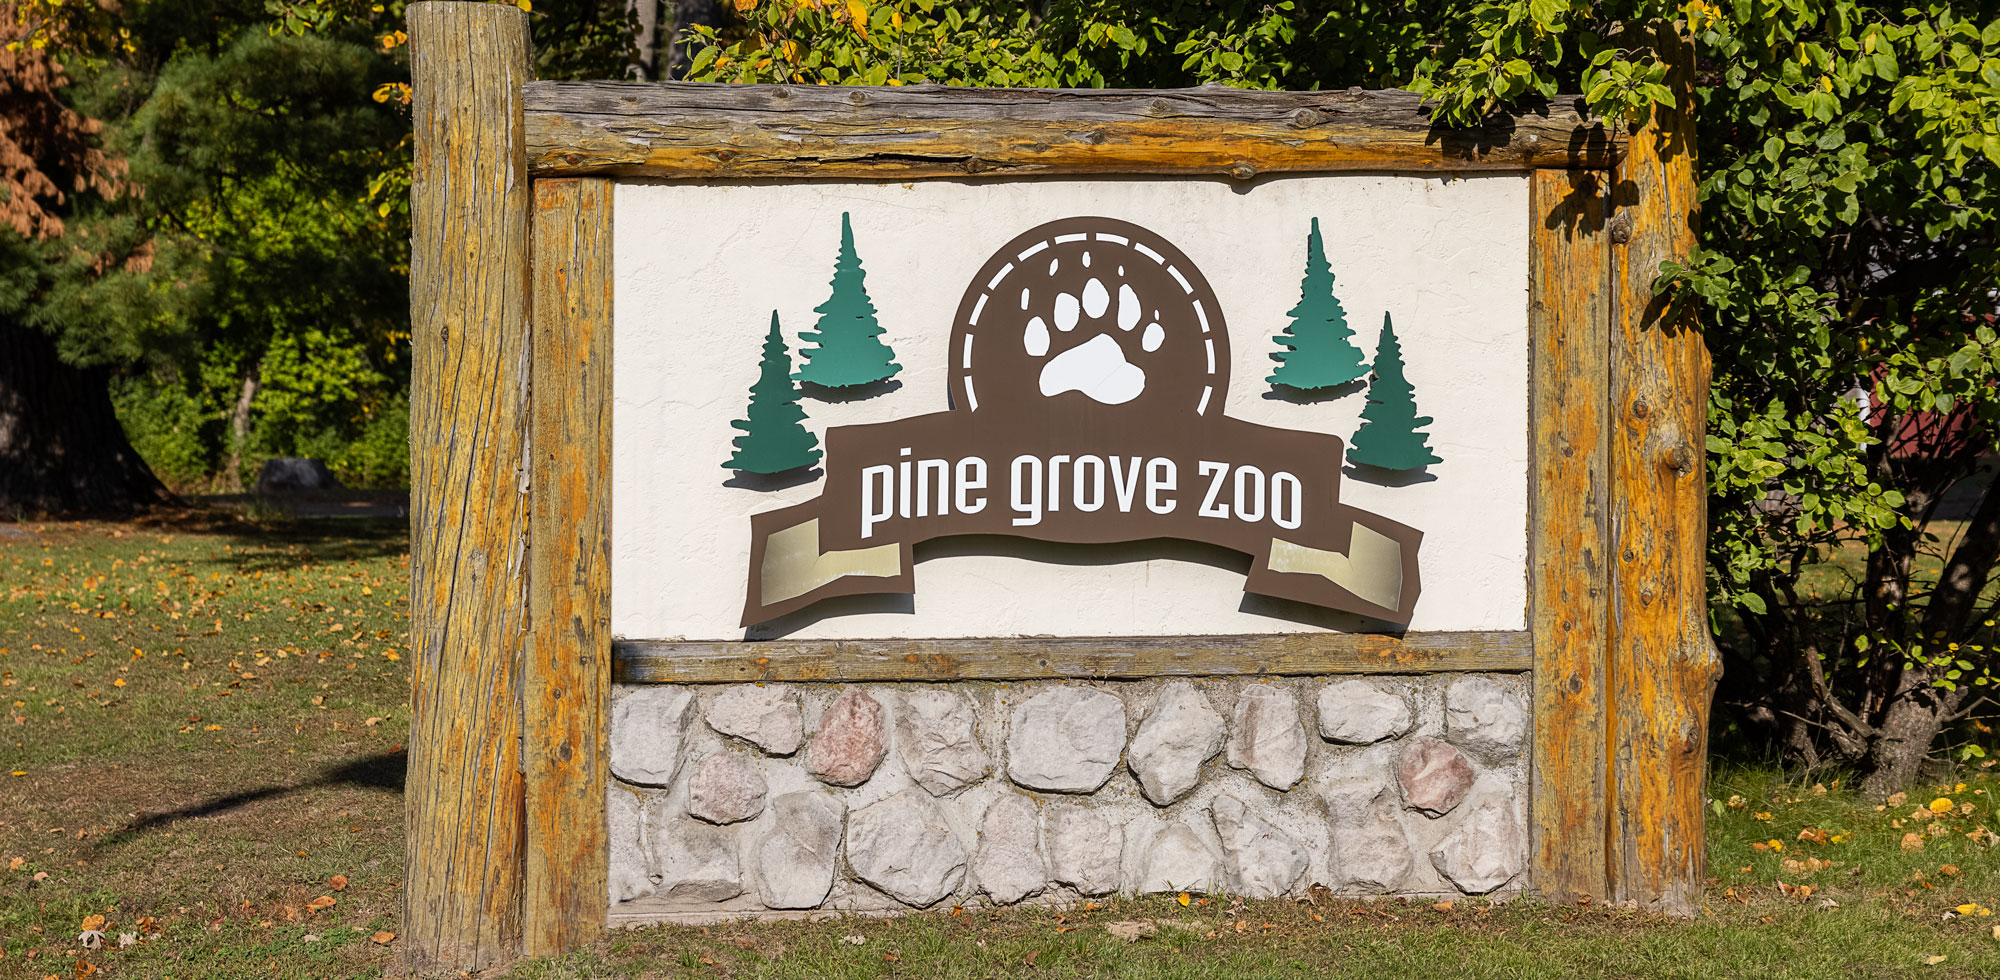 Pine Grove Zoo